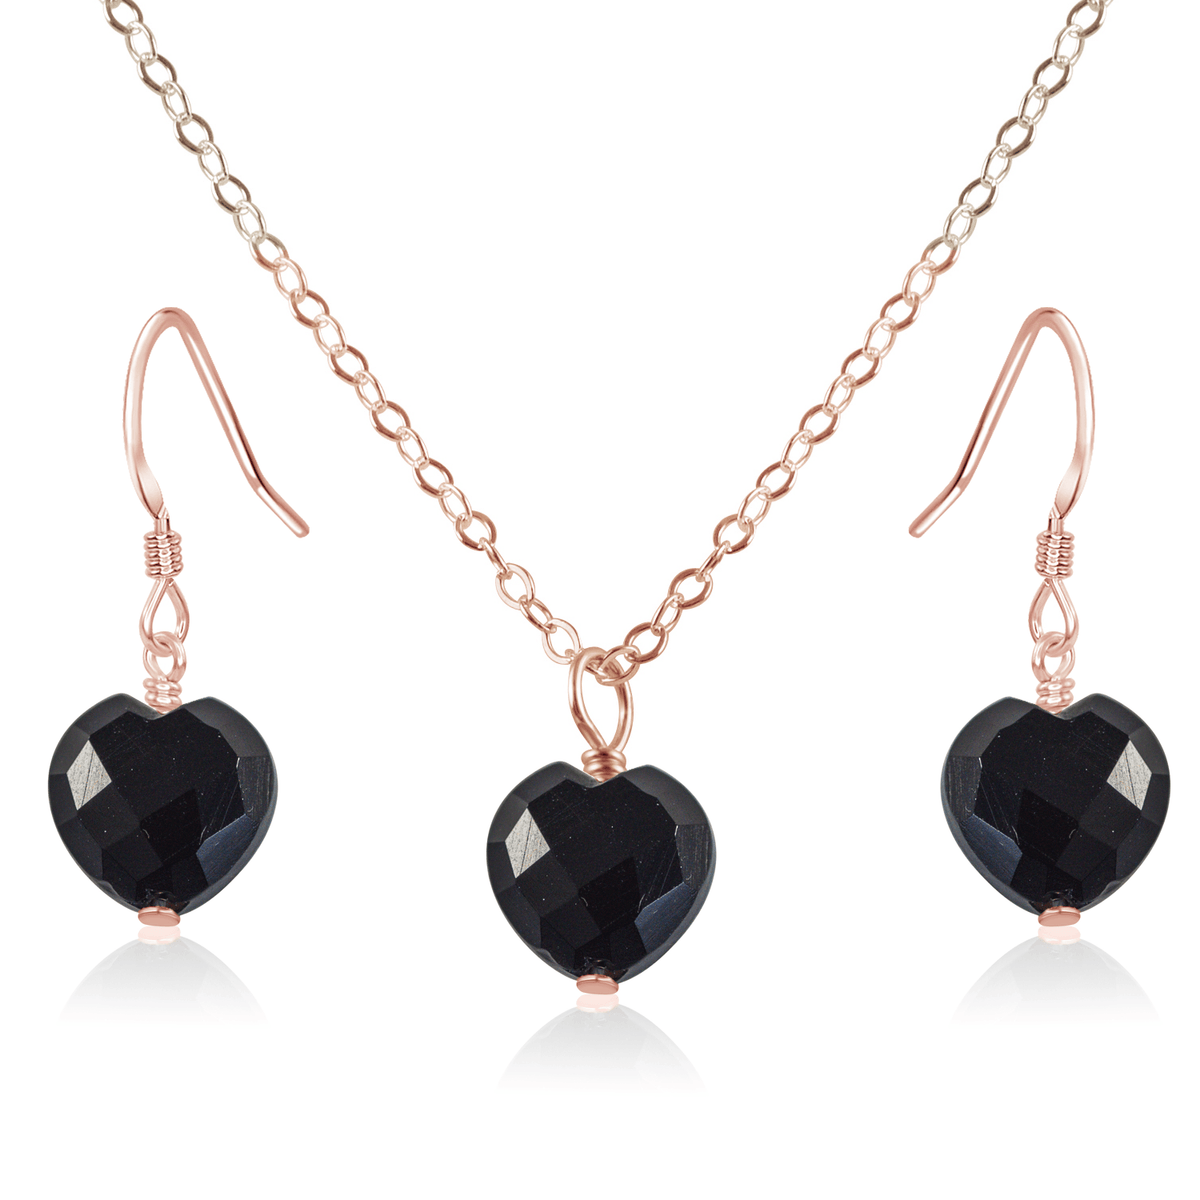 Black Onyx Crystal Heart Jewellery Set - Black Onyx Crystal Heart Jewellery Set - 14k Rose Gold Fill / Cable / Necklace & Earrings - Luna Tide Handmade Crystal Jewellery